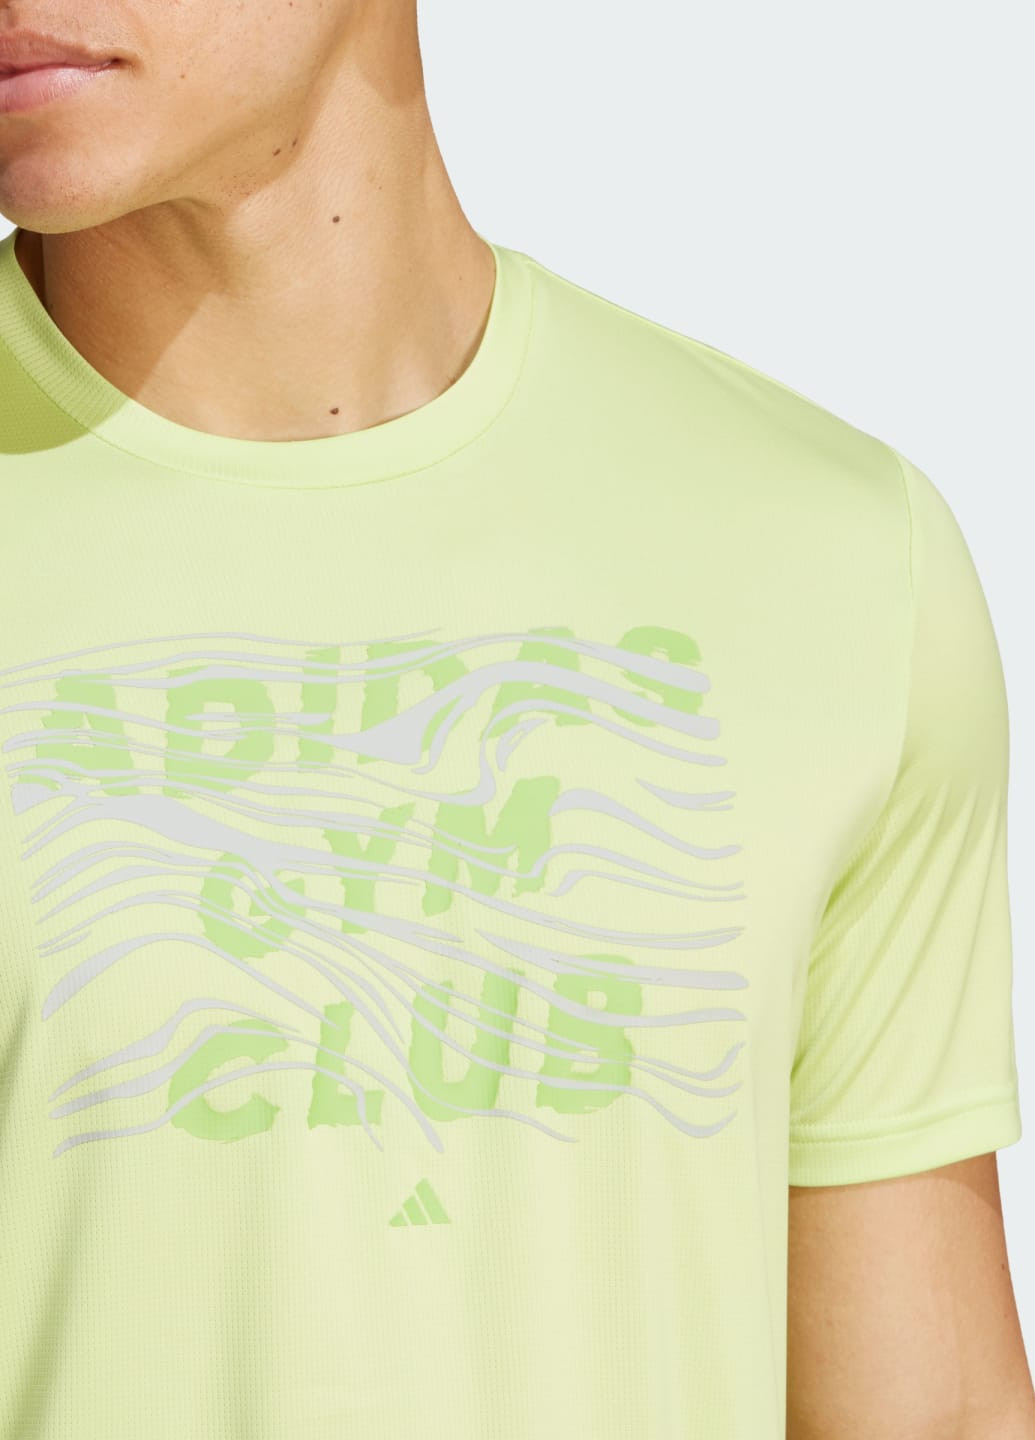 Зеленая футболка hiit graphic training adidas